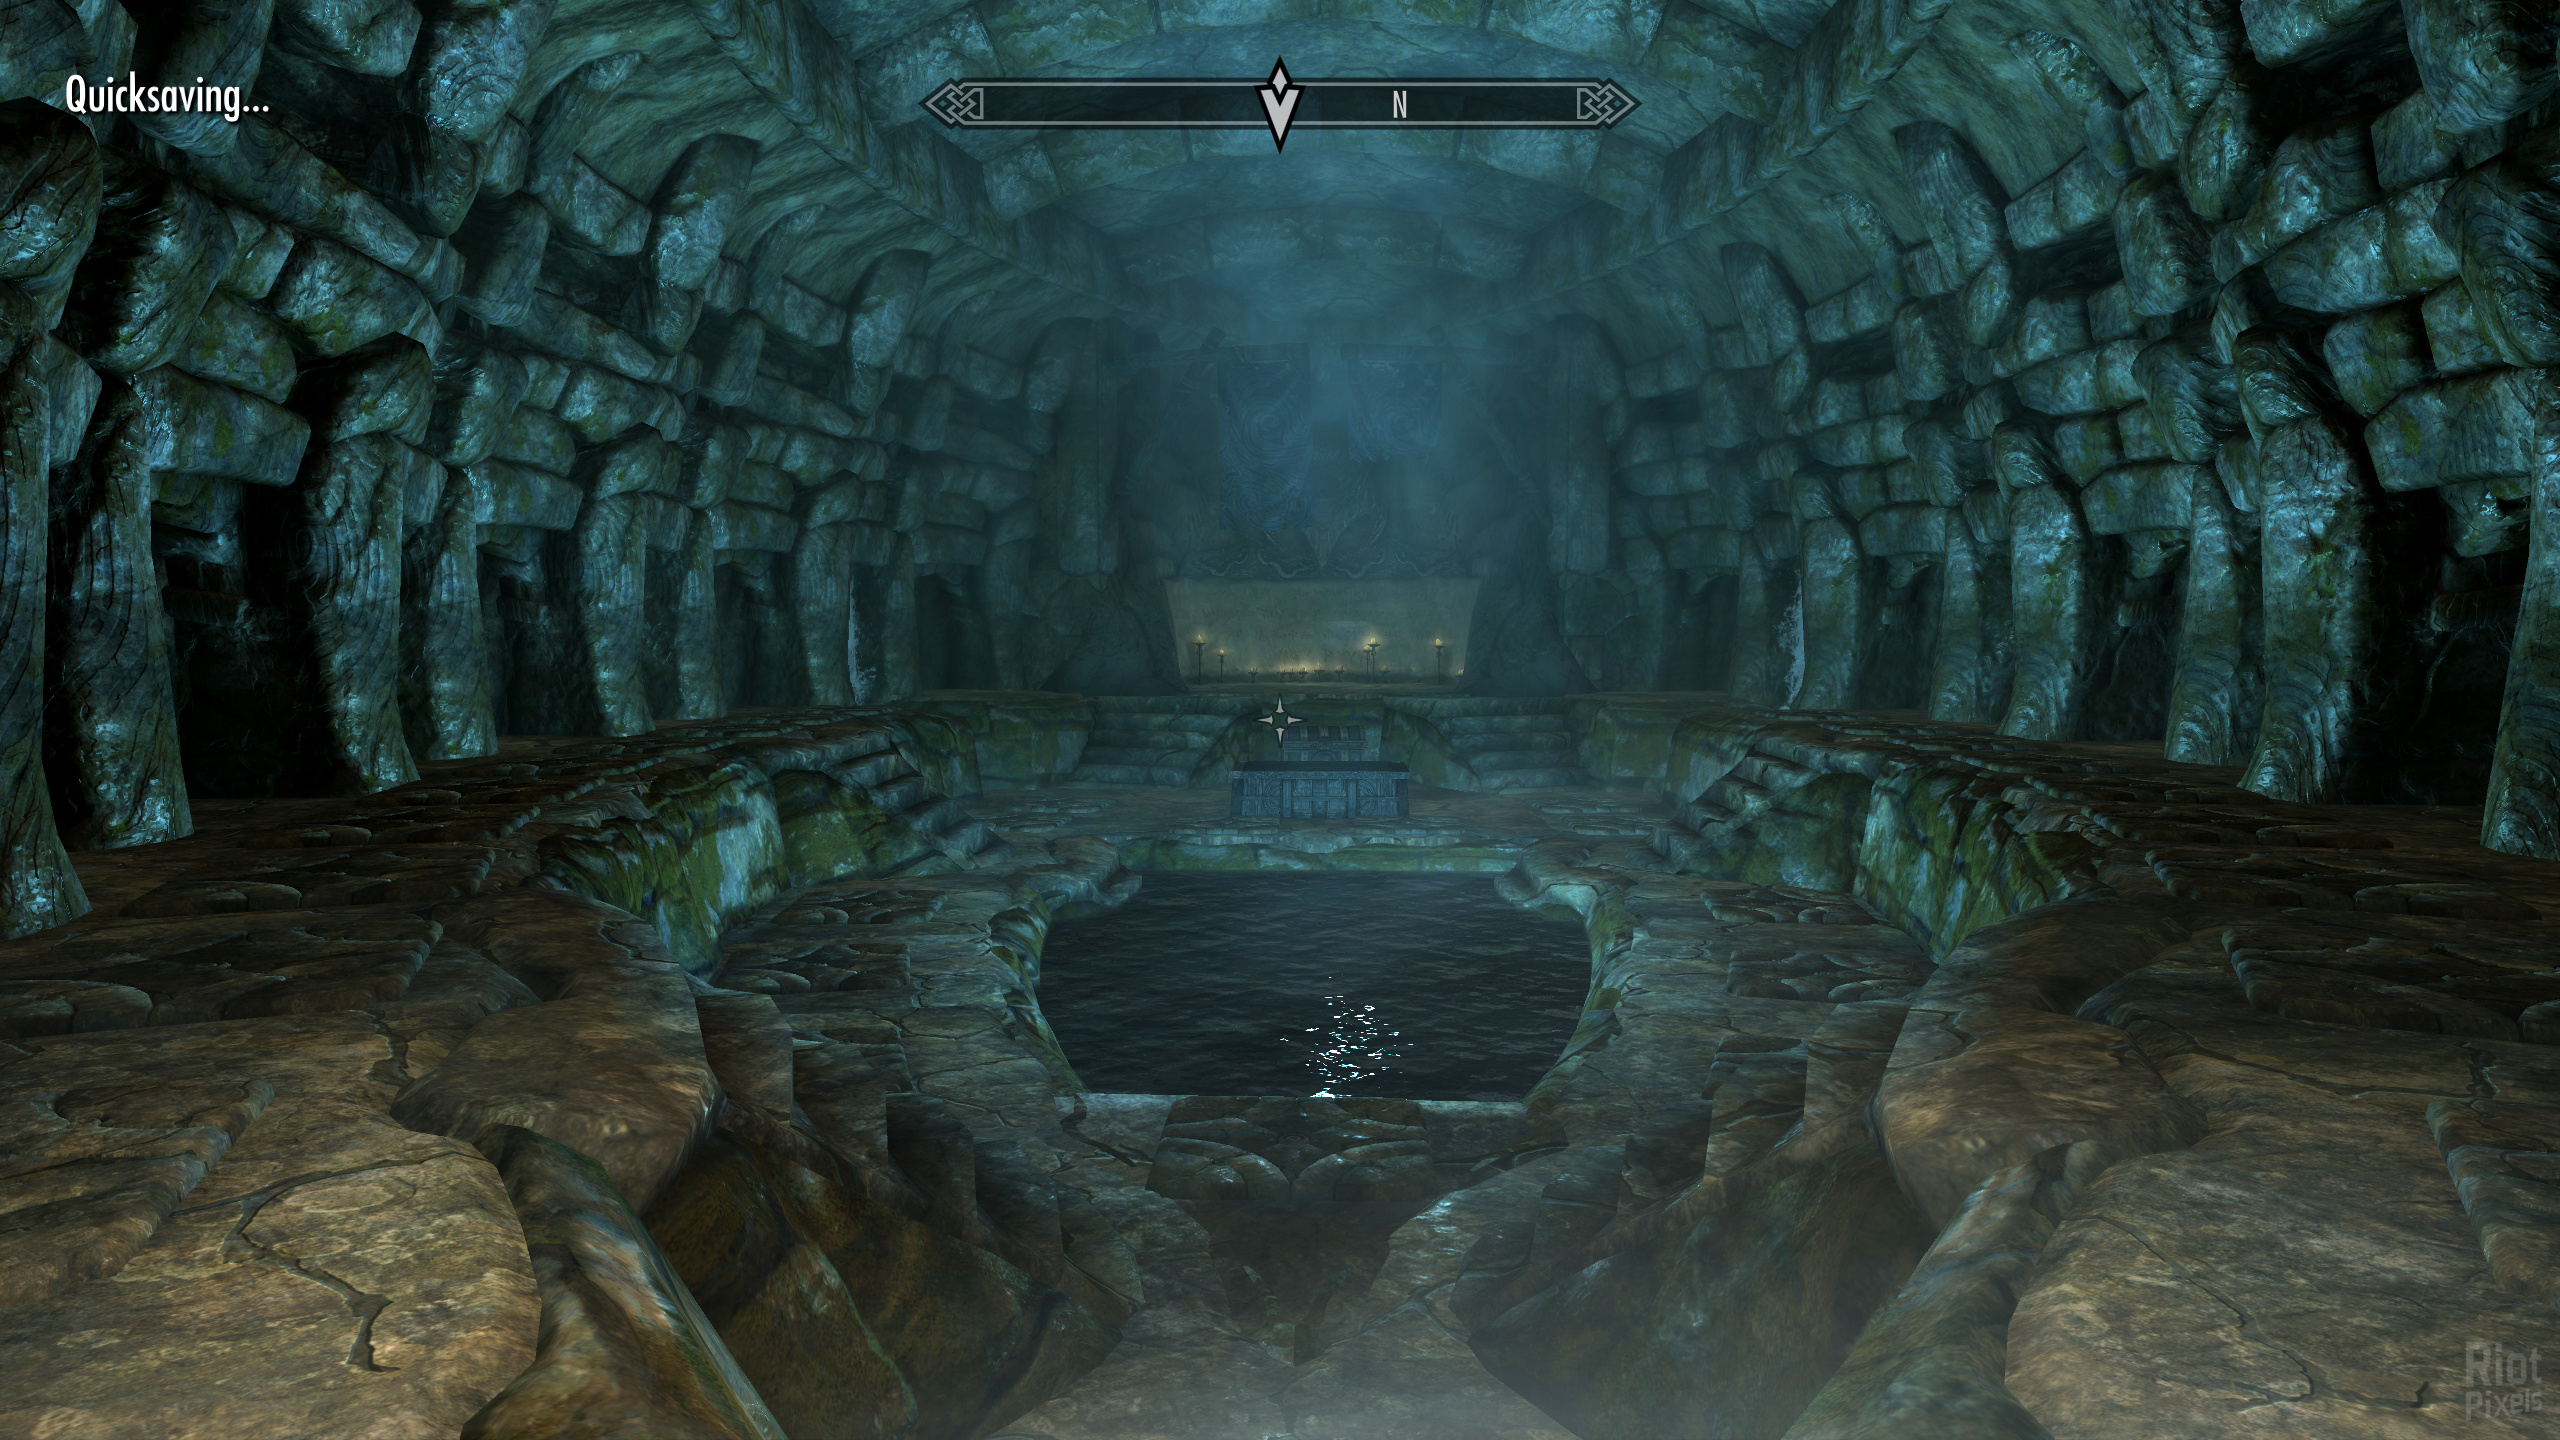 Elder Scrolls 5: Skyrim - Dragonborn, The - game screenshots at Riot  Pixels, images